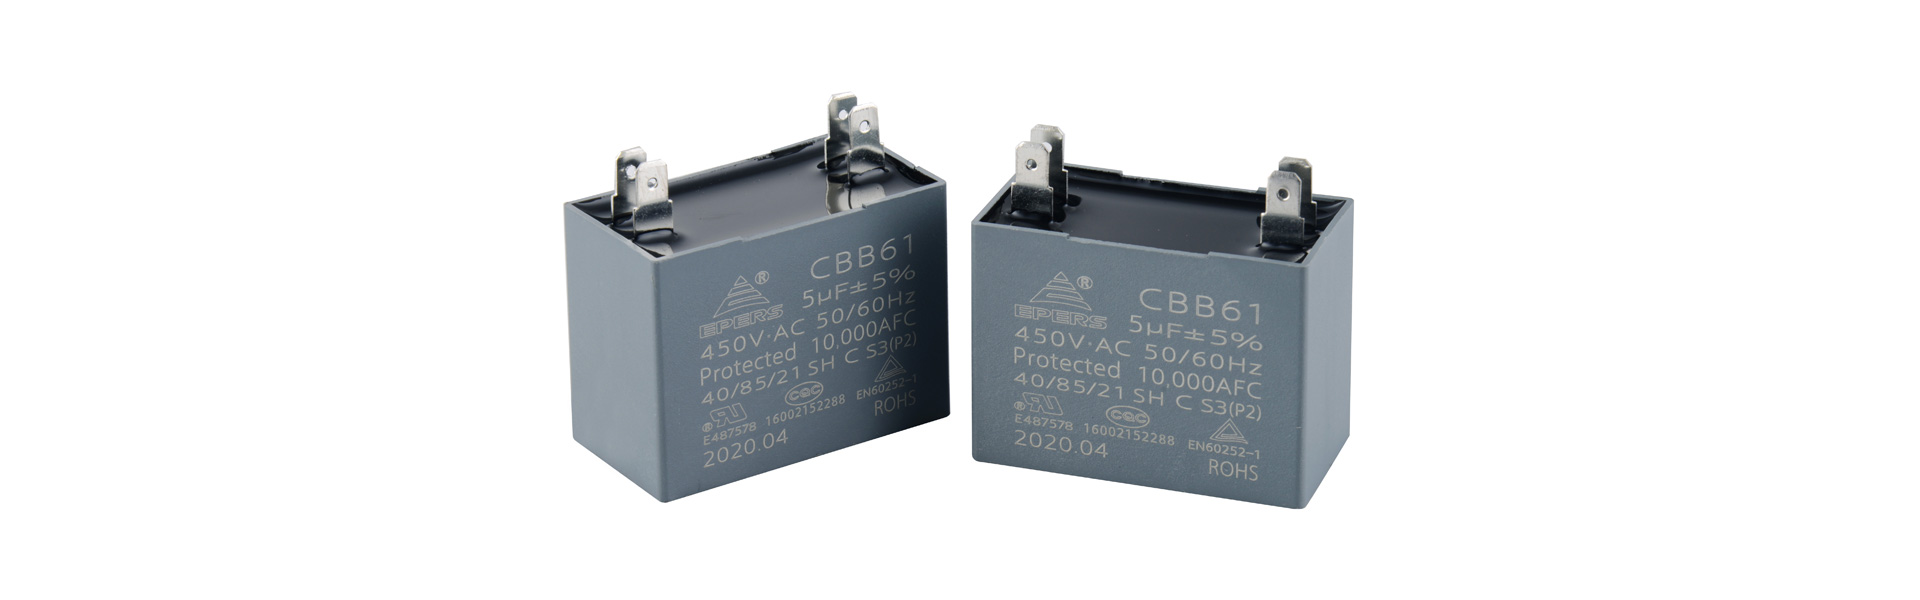 kondensatorkerne, metalliseret film, cbb61,Zhongshan Epers Electrical Appliances Co.,Ltd.